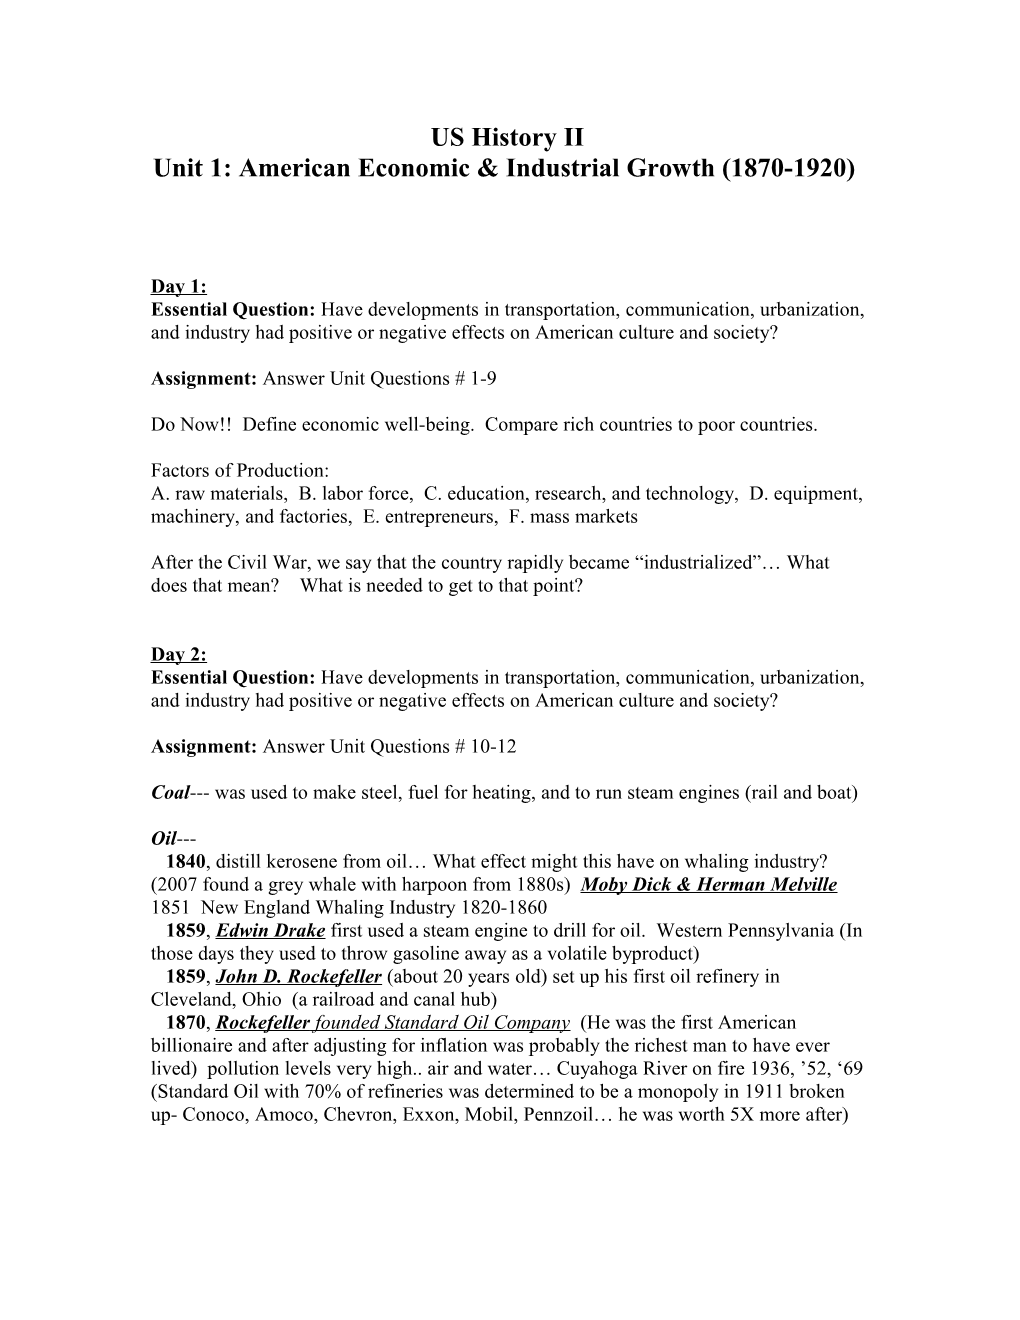 Unit 1: American Economic & Industrial Growth (1870-1920)